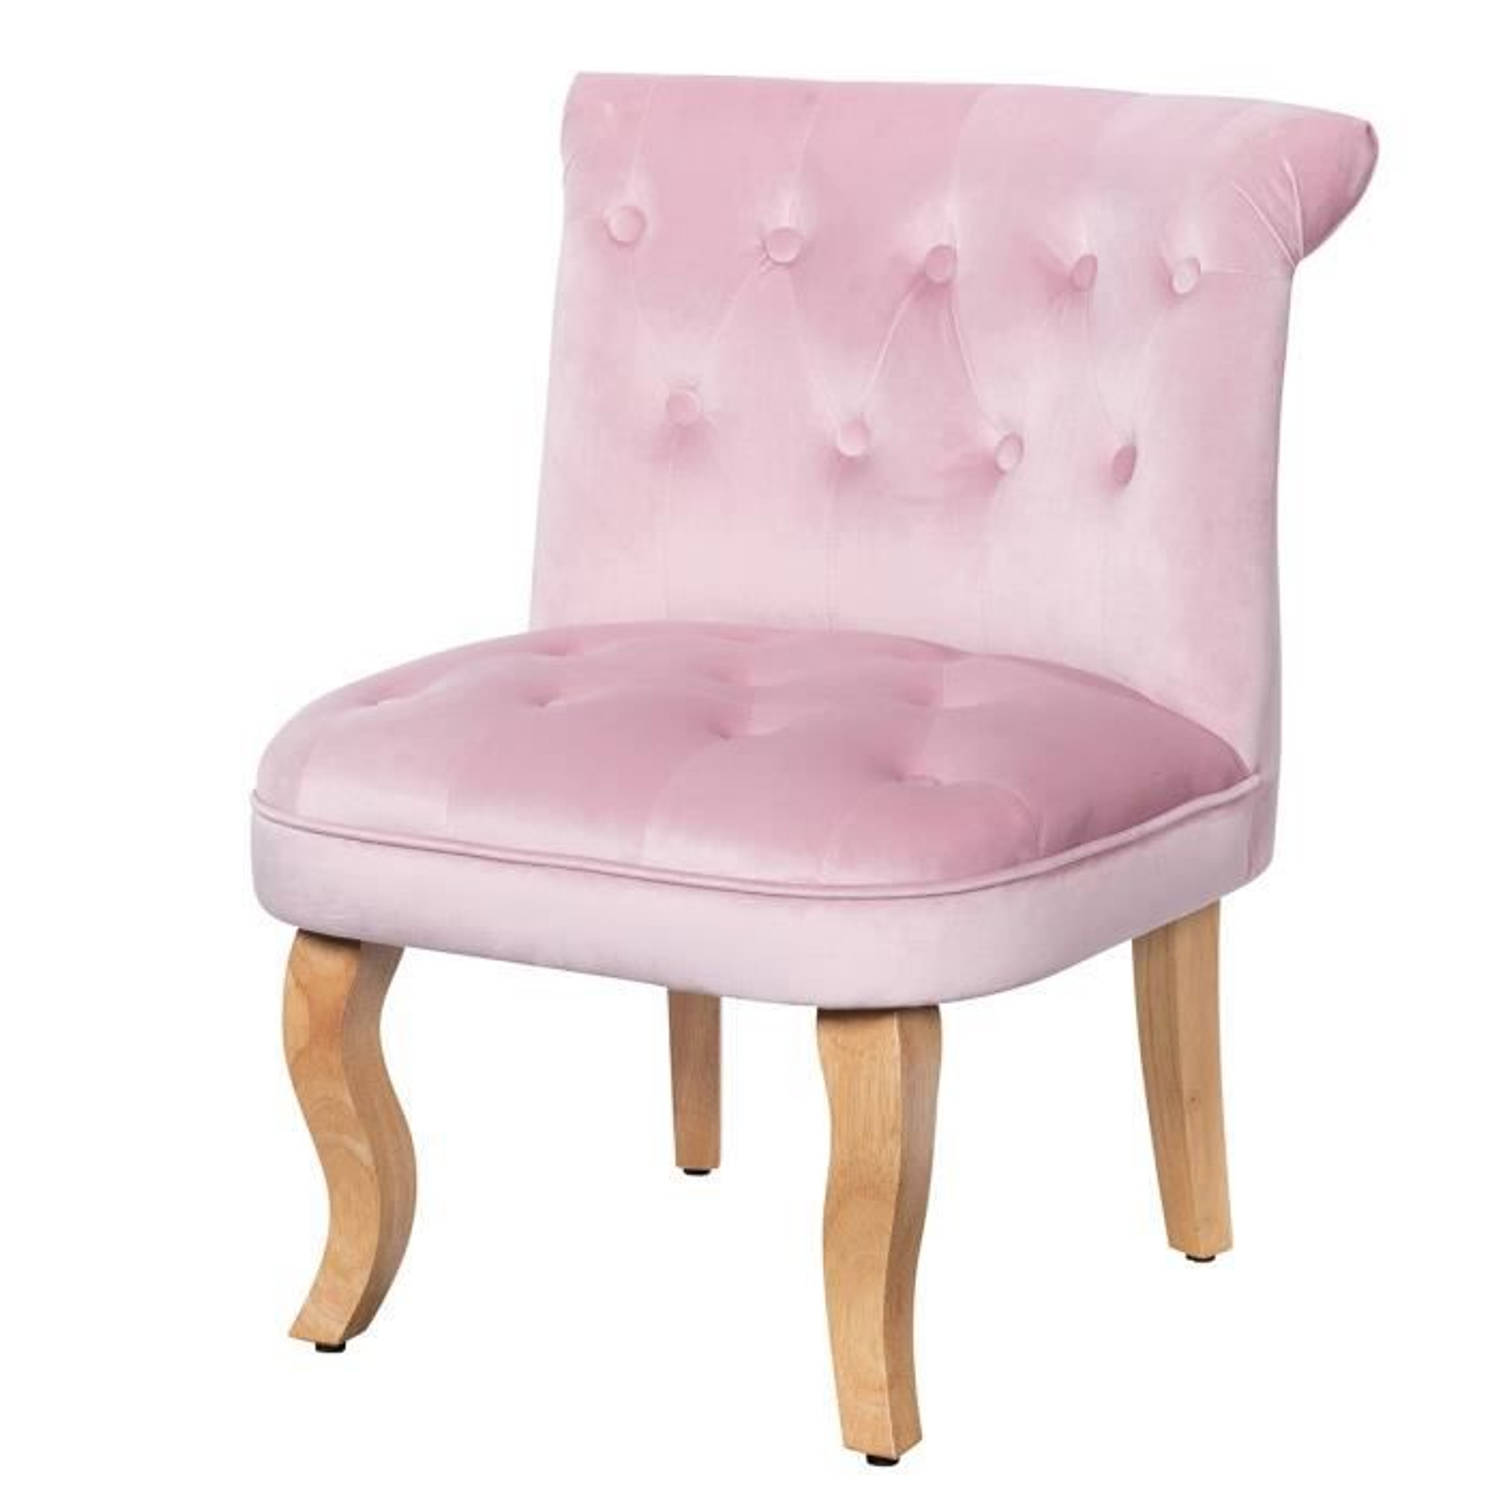 JODIE Toad fauteuil - Houten poten - Roze fluweel - L 56 x D 63 x H 73 cm